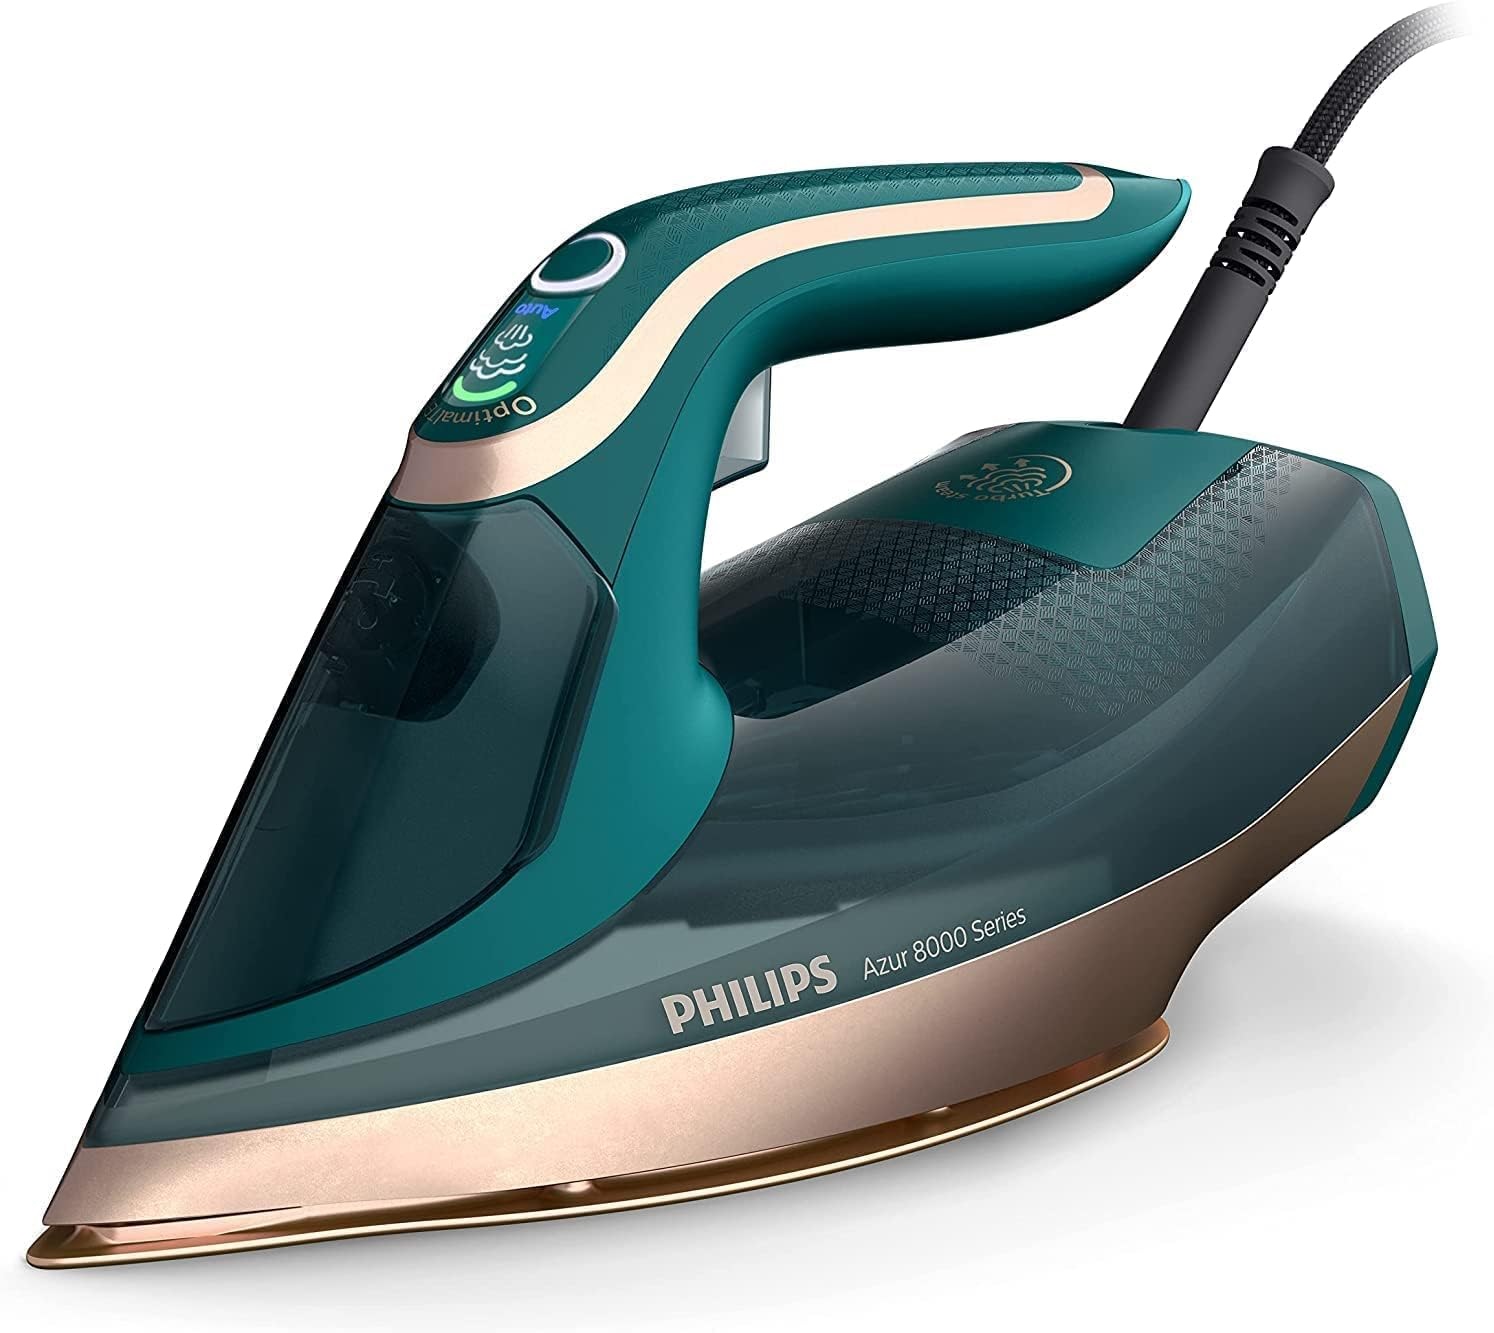 Philips DST8030